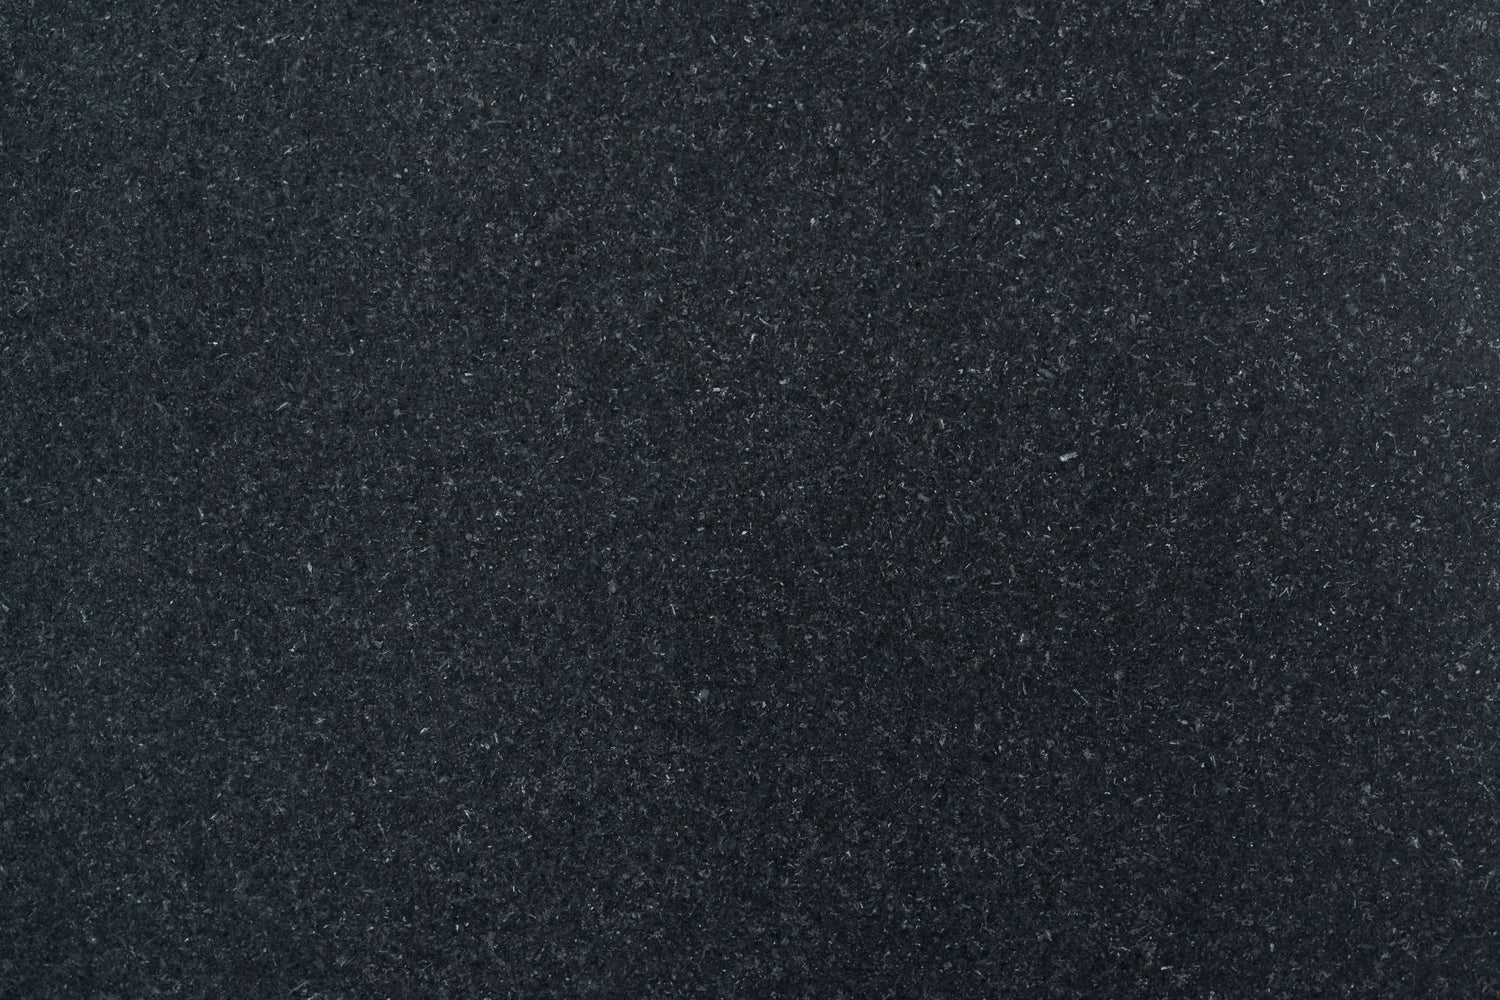 Absolute Black Granite Tile - 12" x 12" x 3/8" Honed